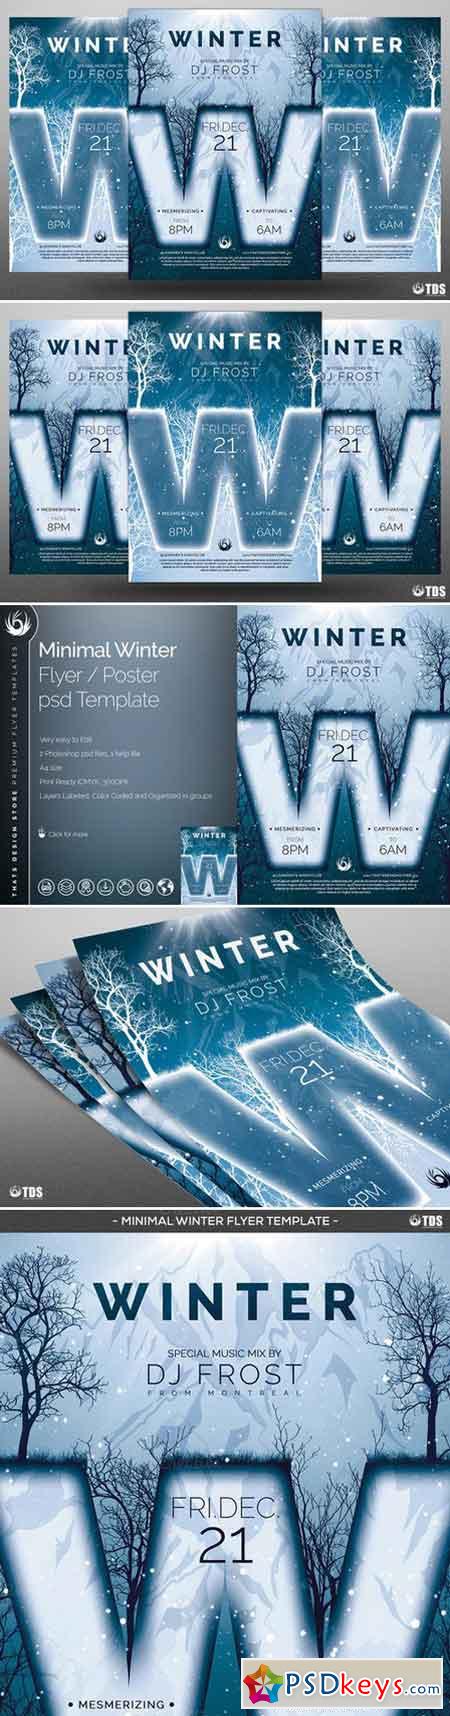 Minimal Winter Flyer Template 956925